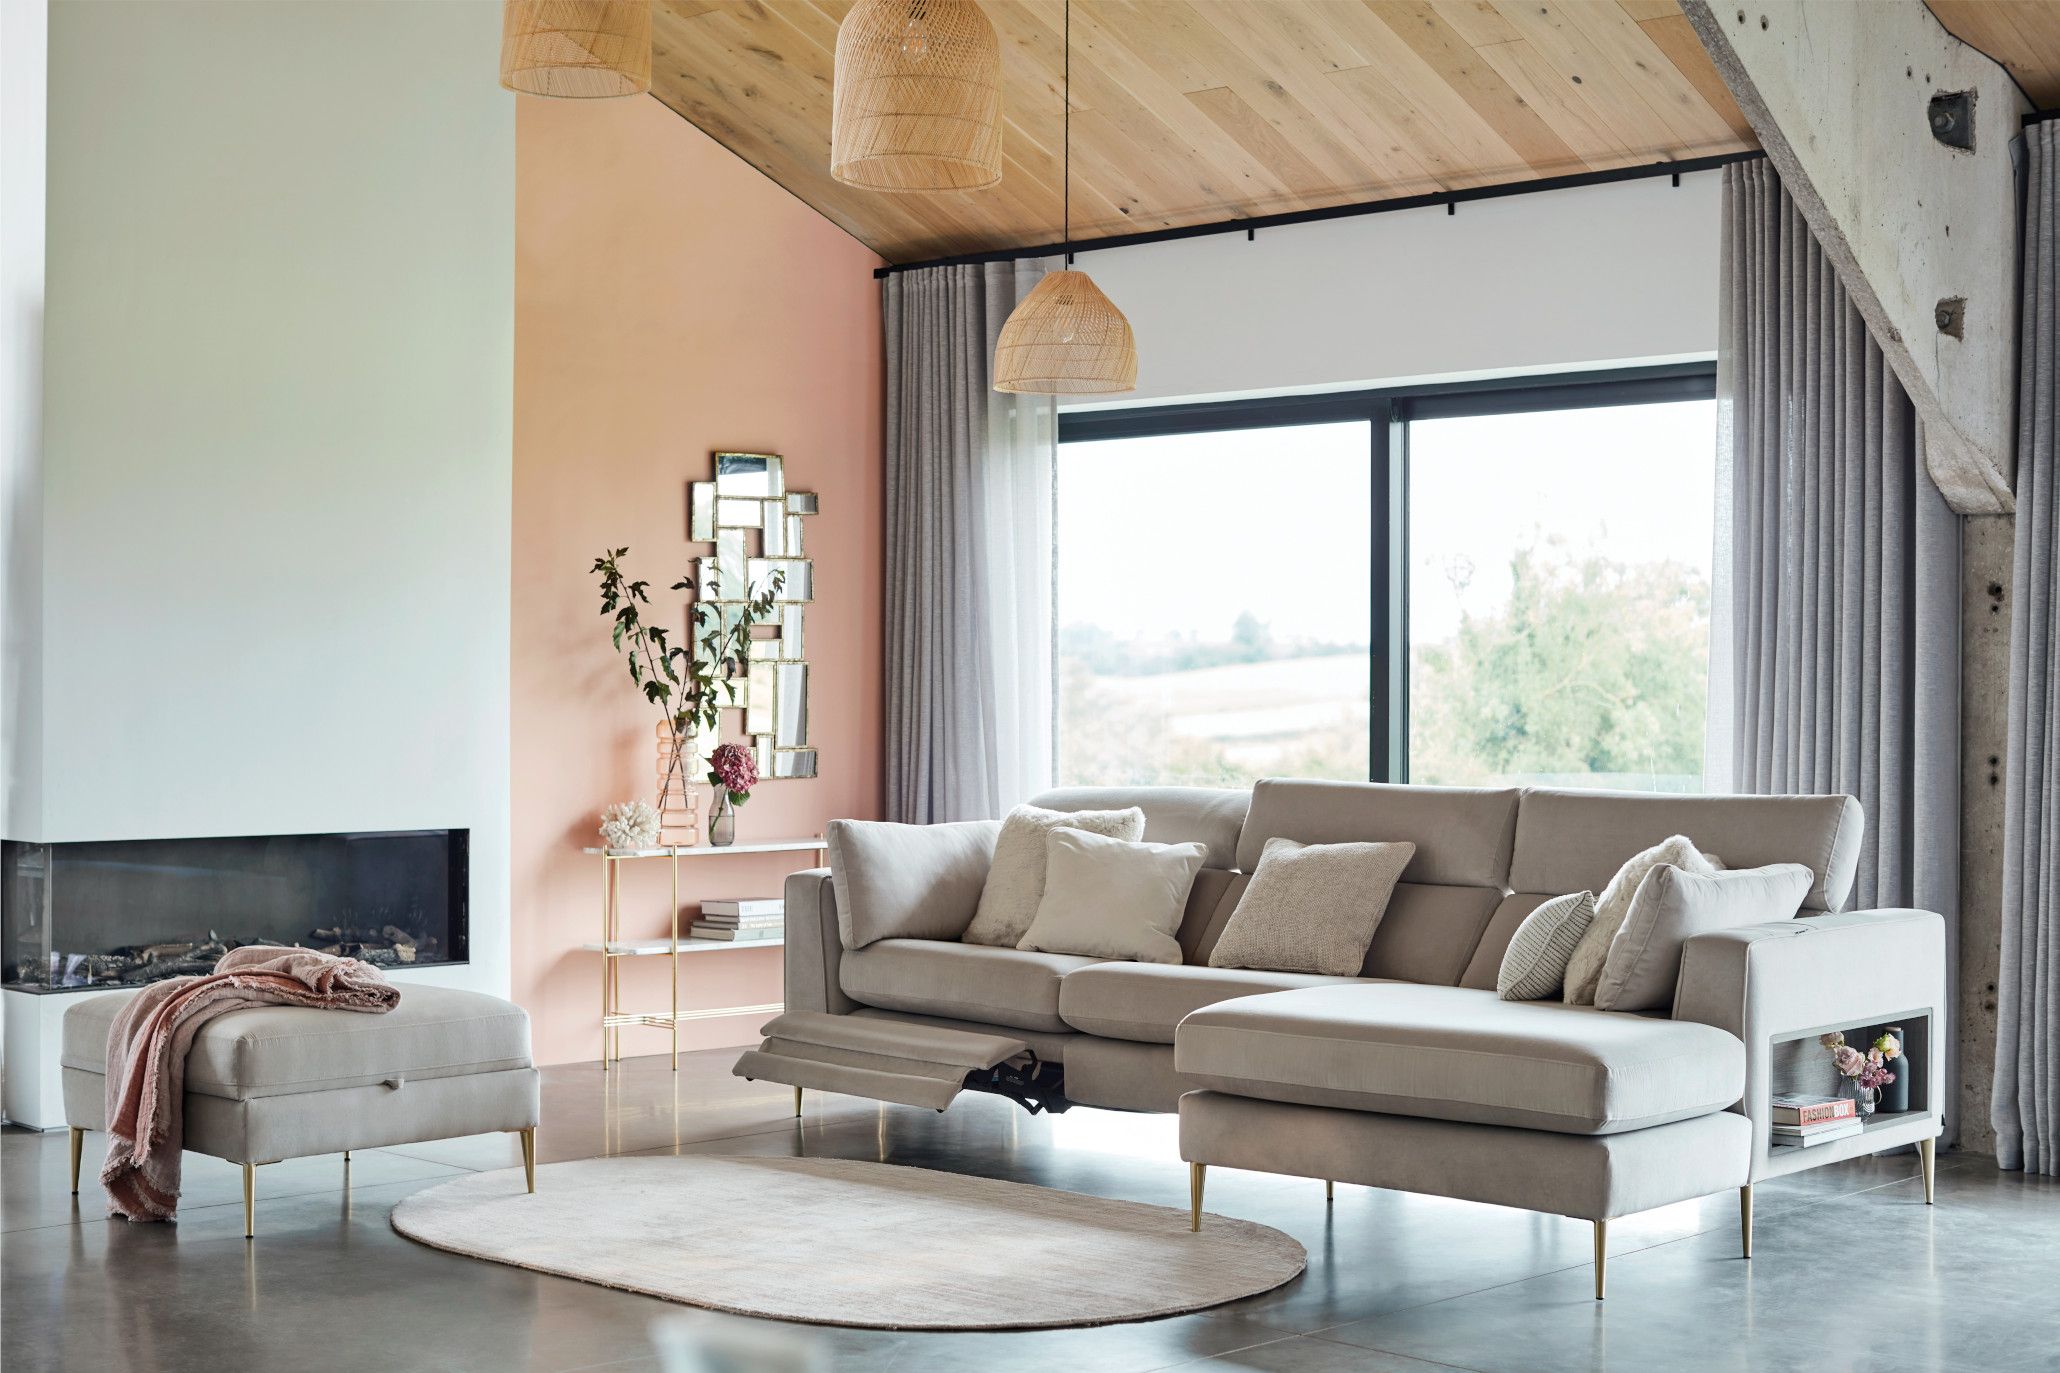 New DFS Storeaway sofas - Good Homes magazine : Goodhomes Magazine